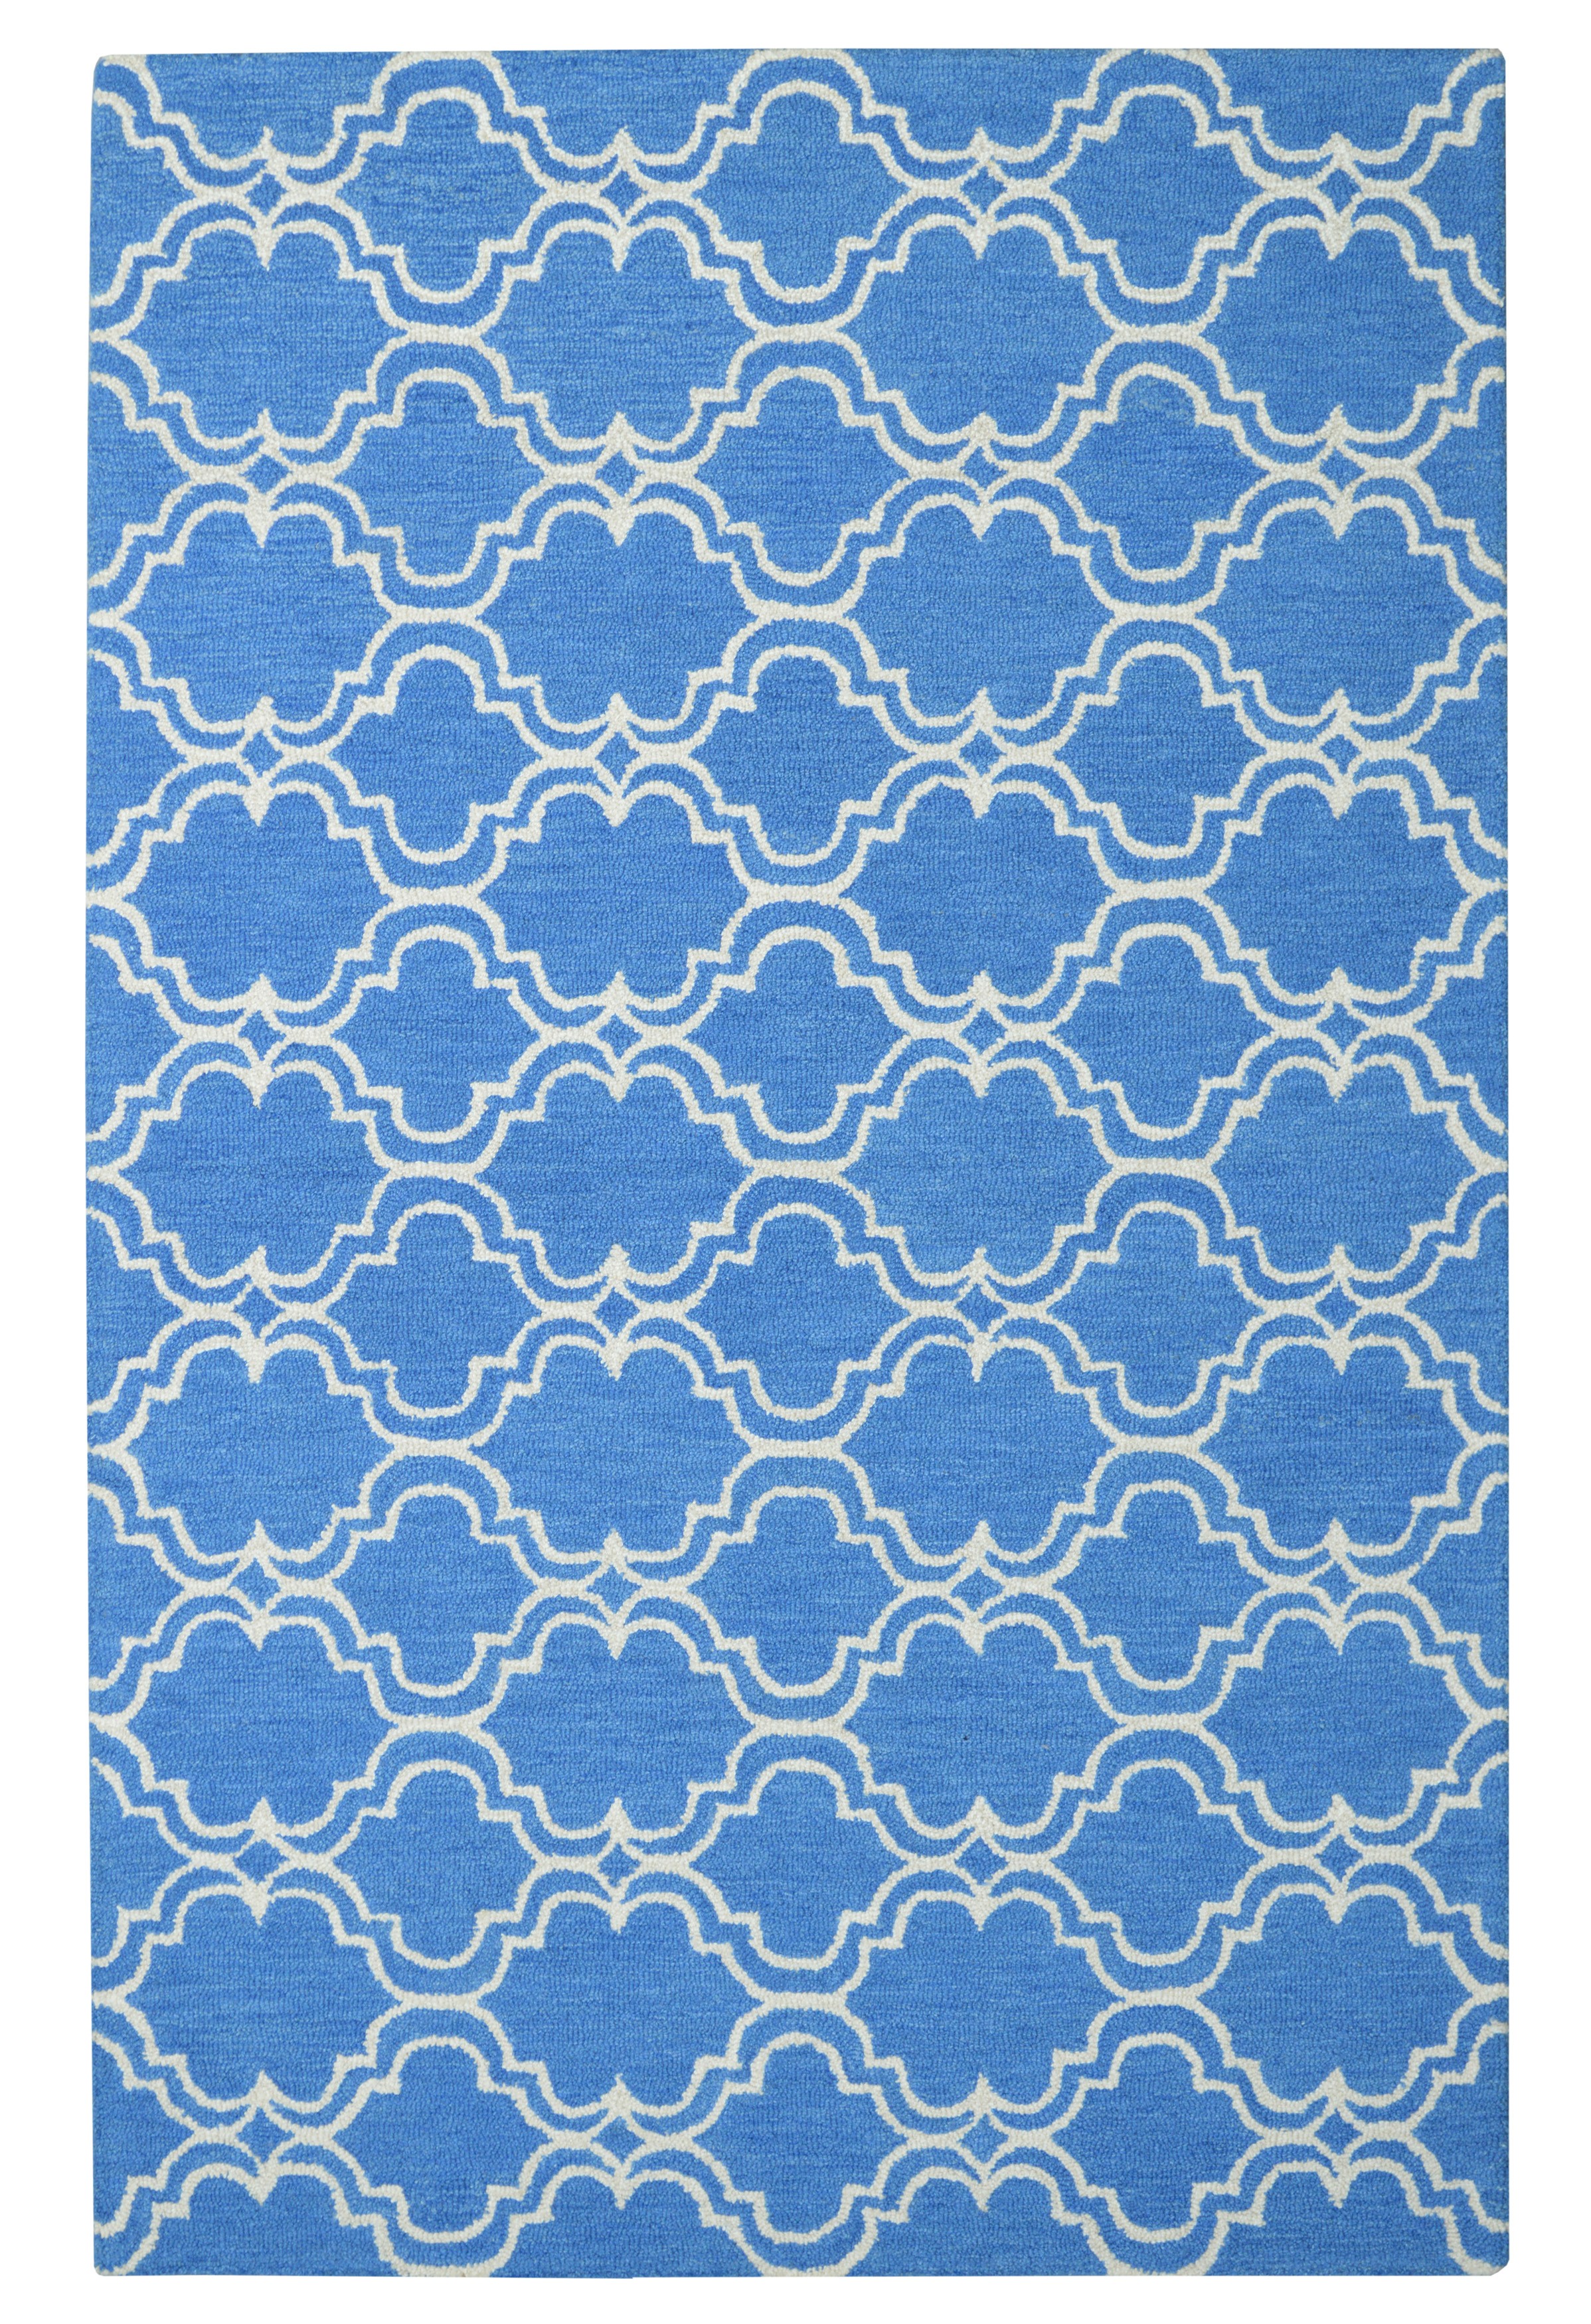 DeluxeComfort.com Moroccan Trellis Scroll Tile Royal Blue Rug 5' x 8'